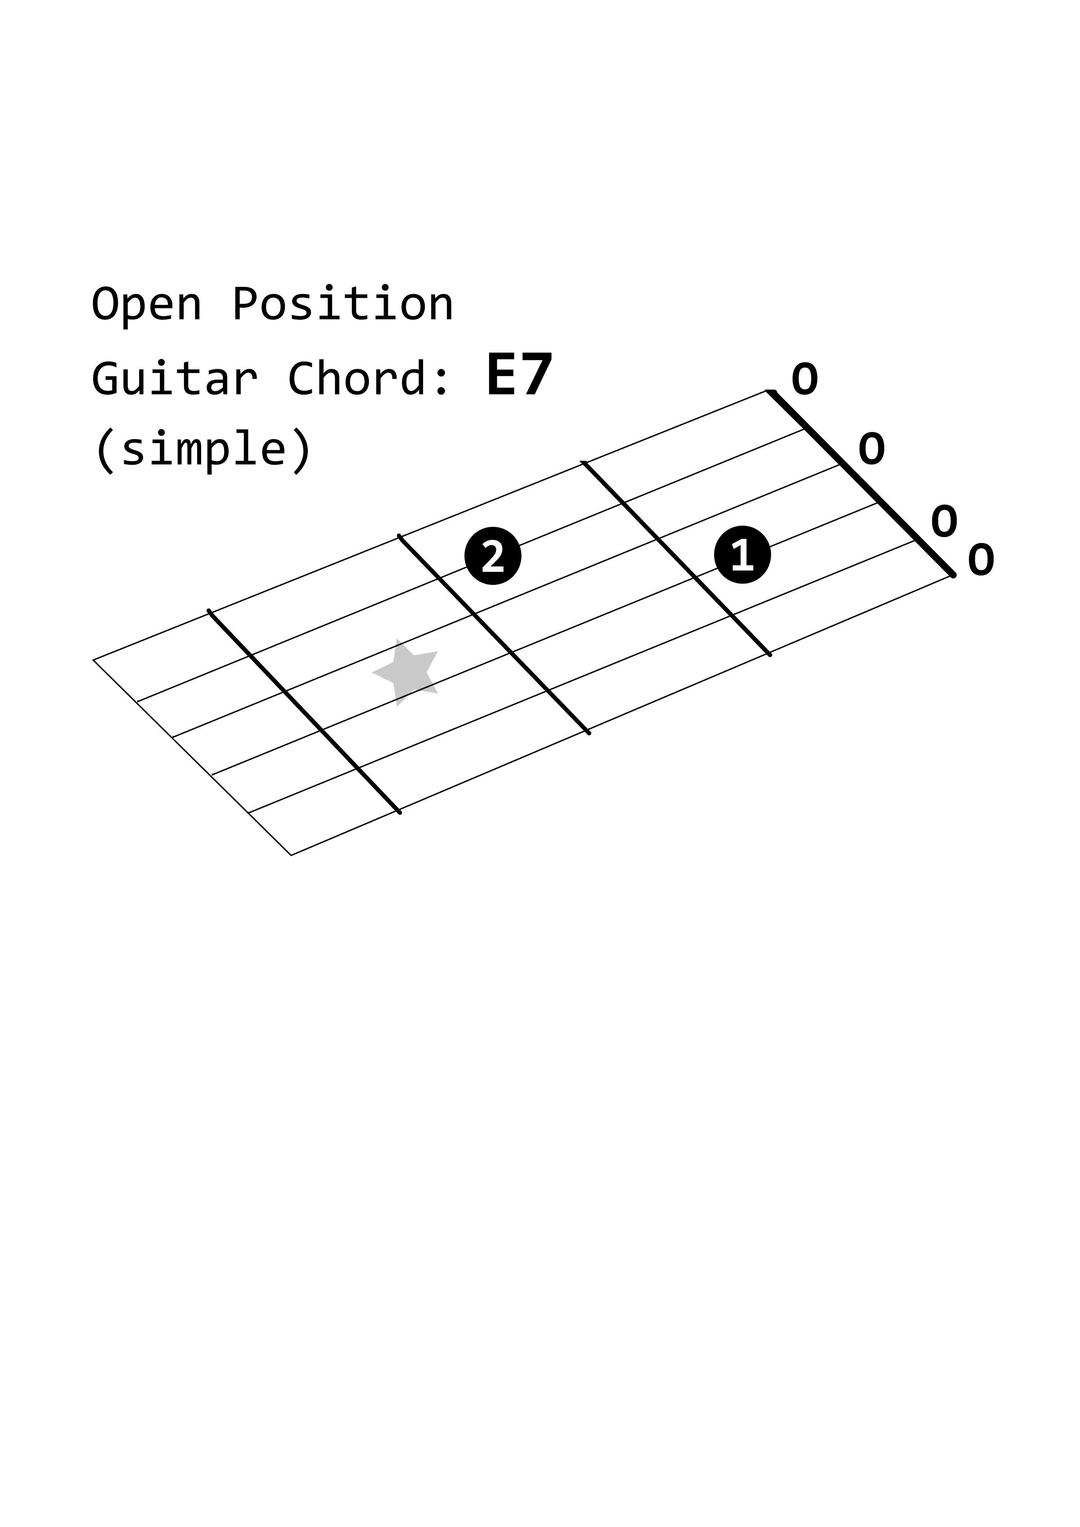 Open Position Guitar Chord: E7 (simple) png transparent